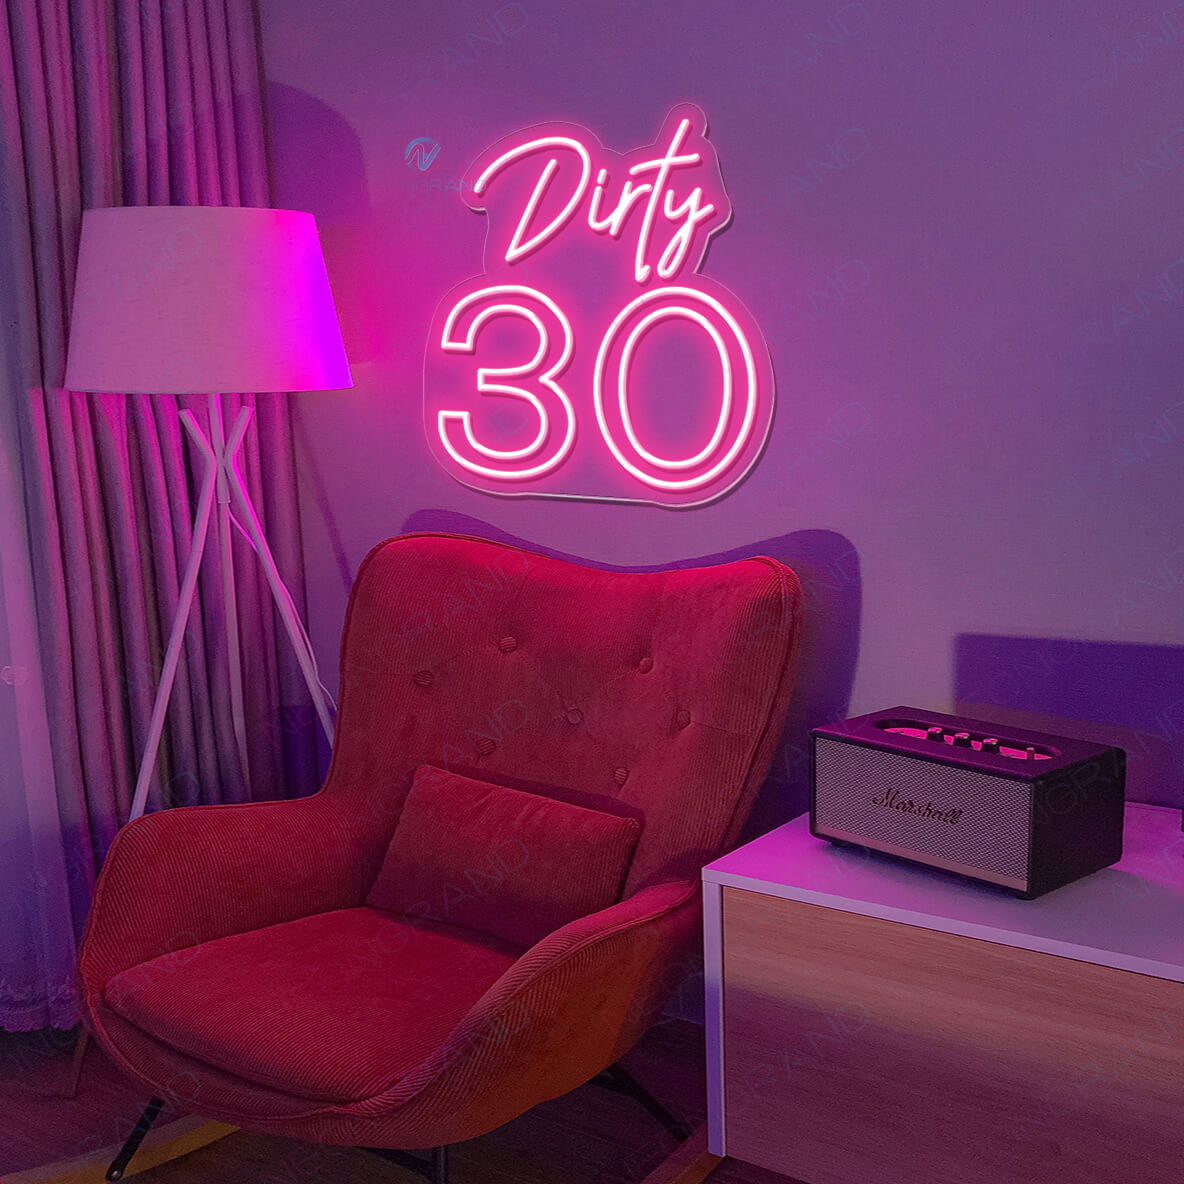 Dirty 30 Neon Sign Happy Birthday Led Light